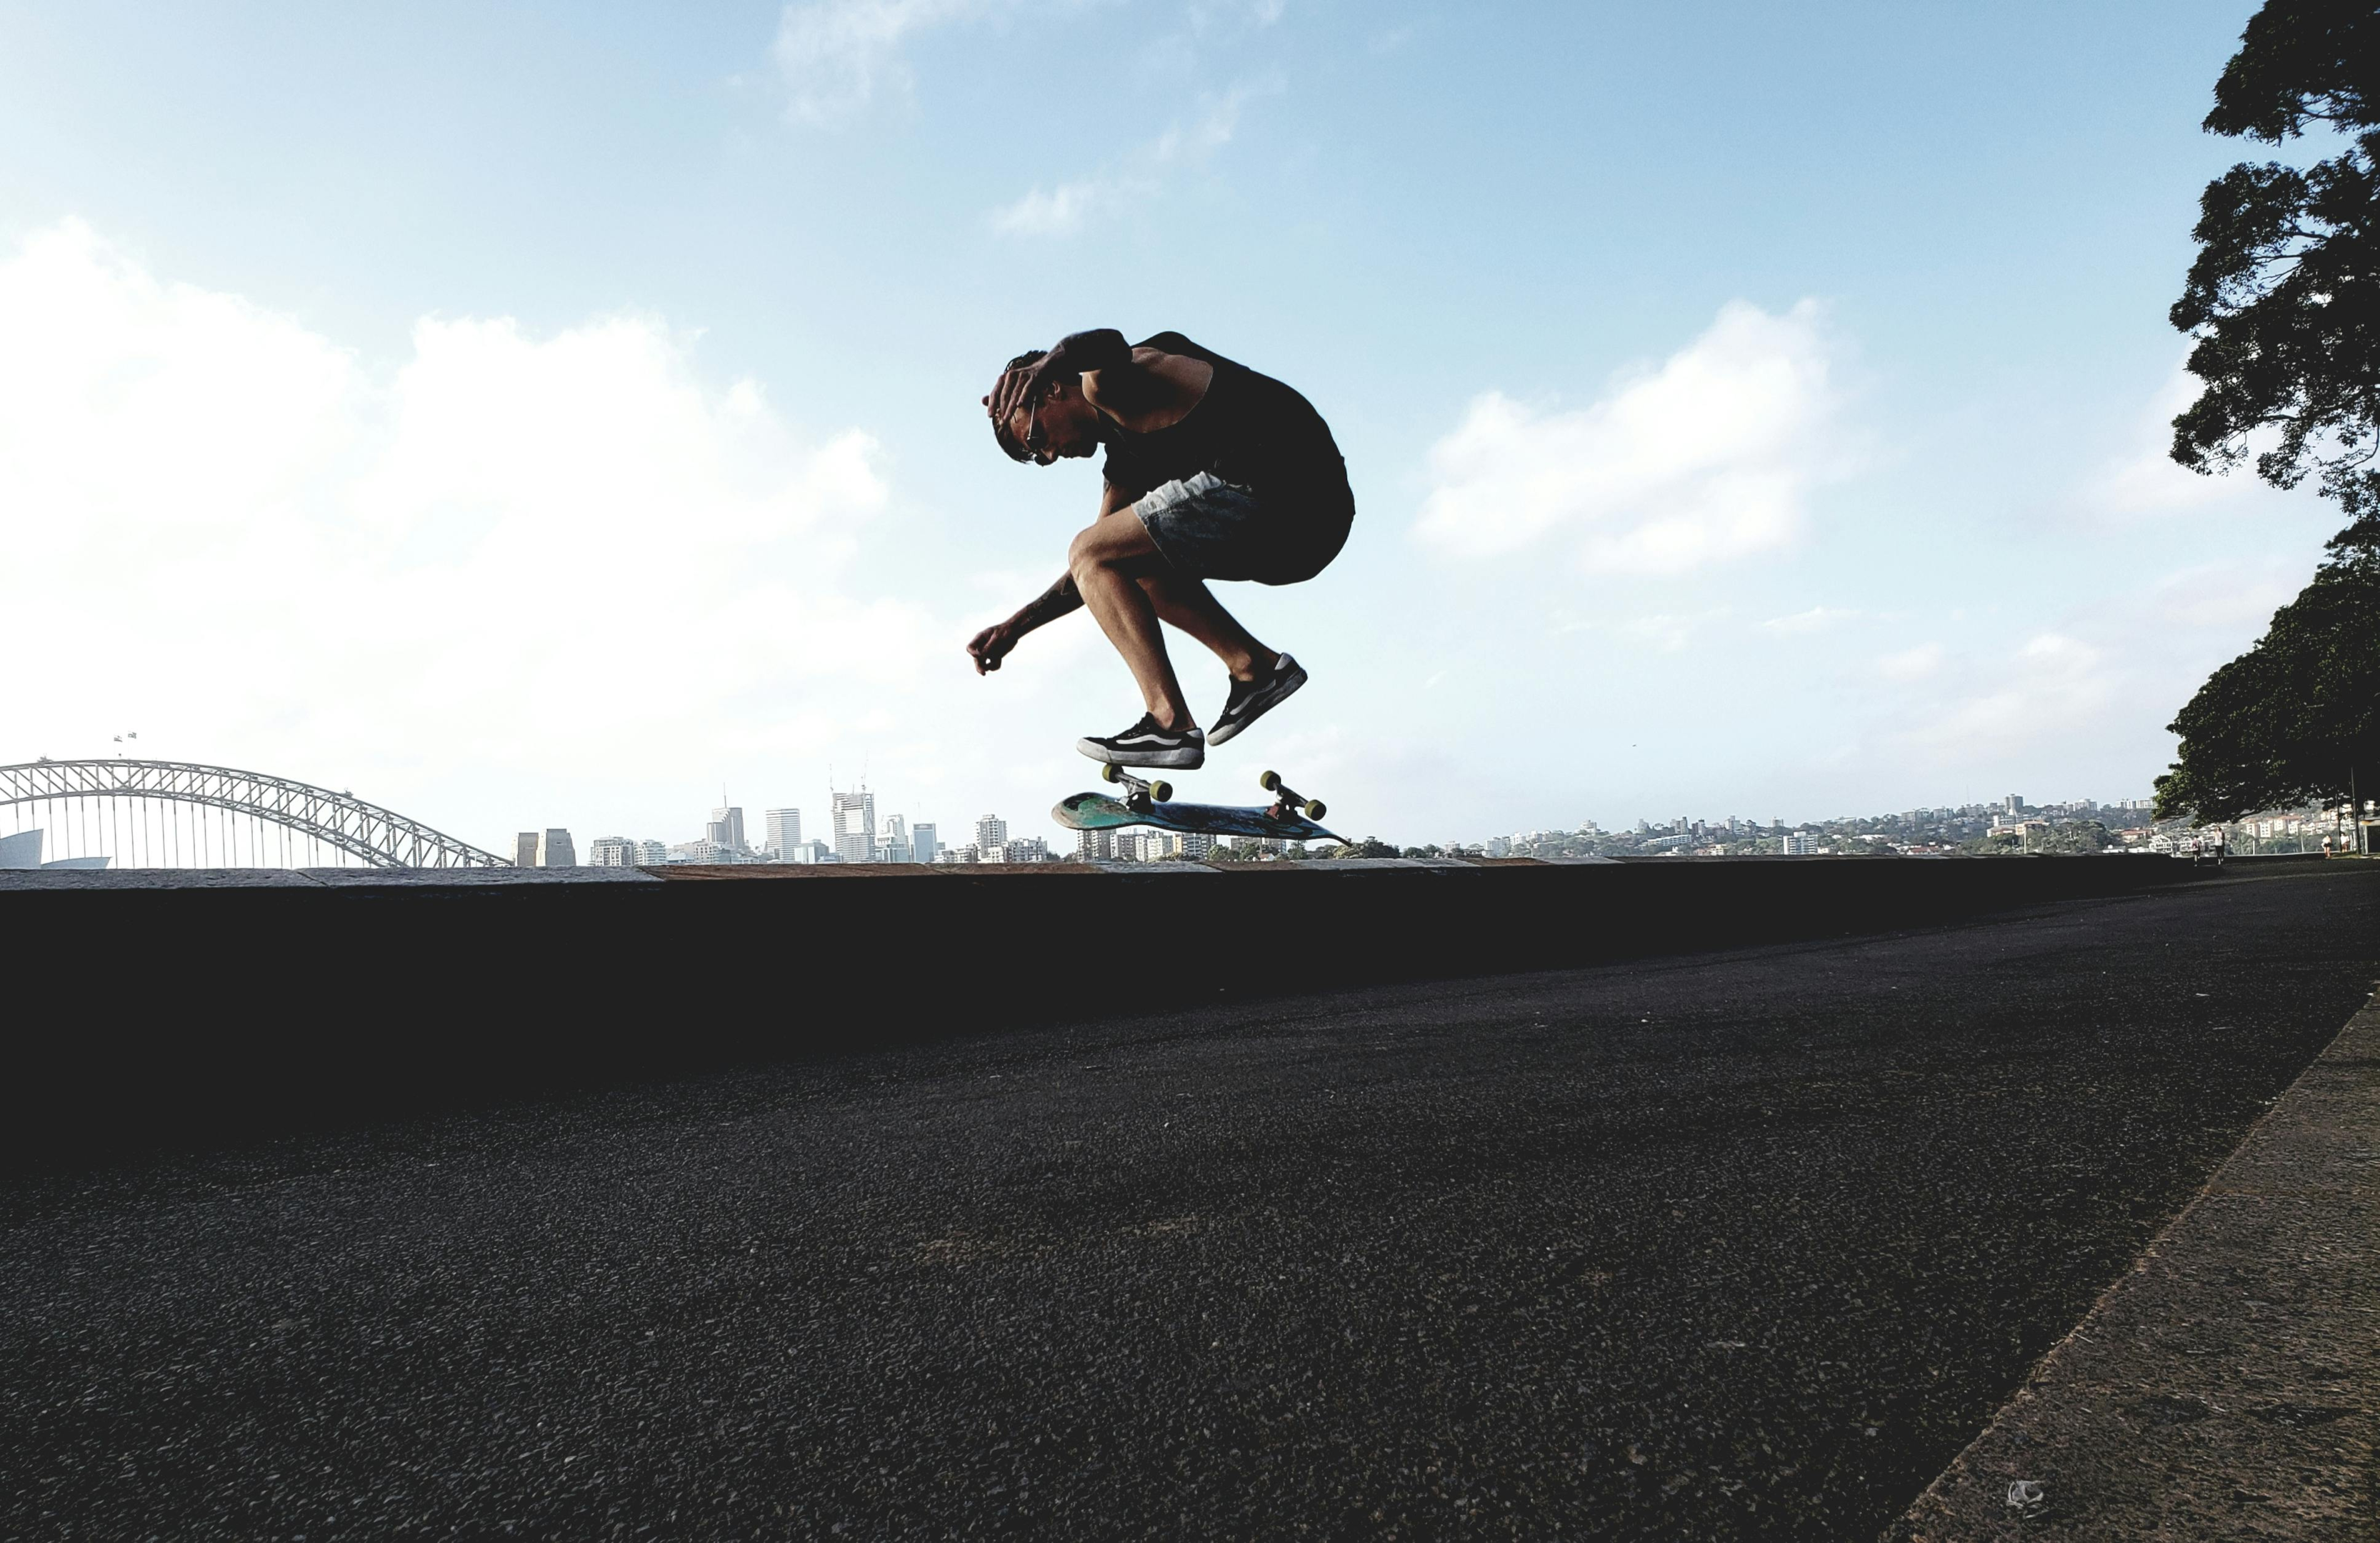 The evolution of the skateboard wheel and skateboard deck allows for the modern version of skateboarding covered by skateboarding magazines